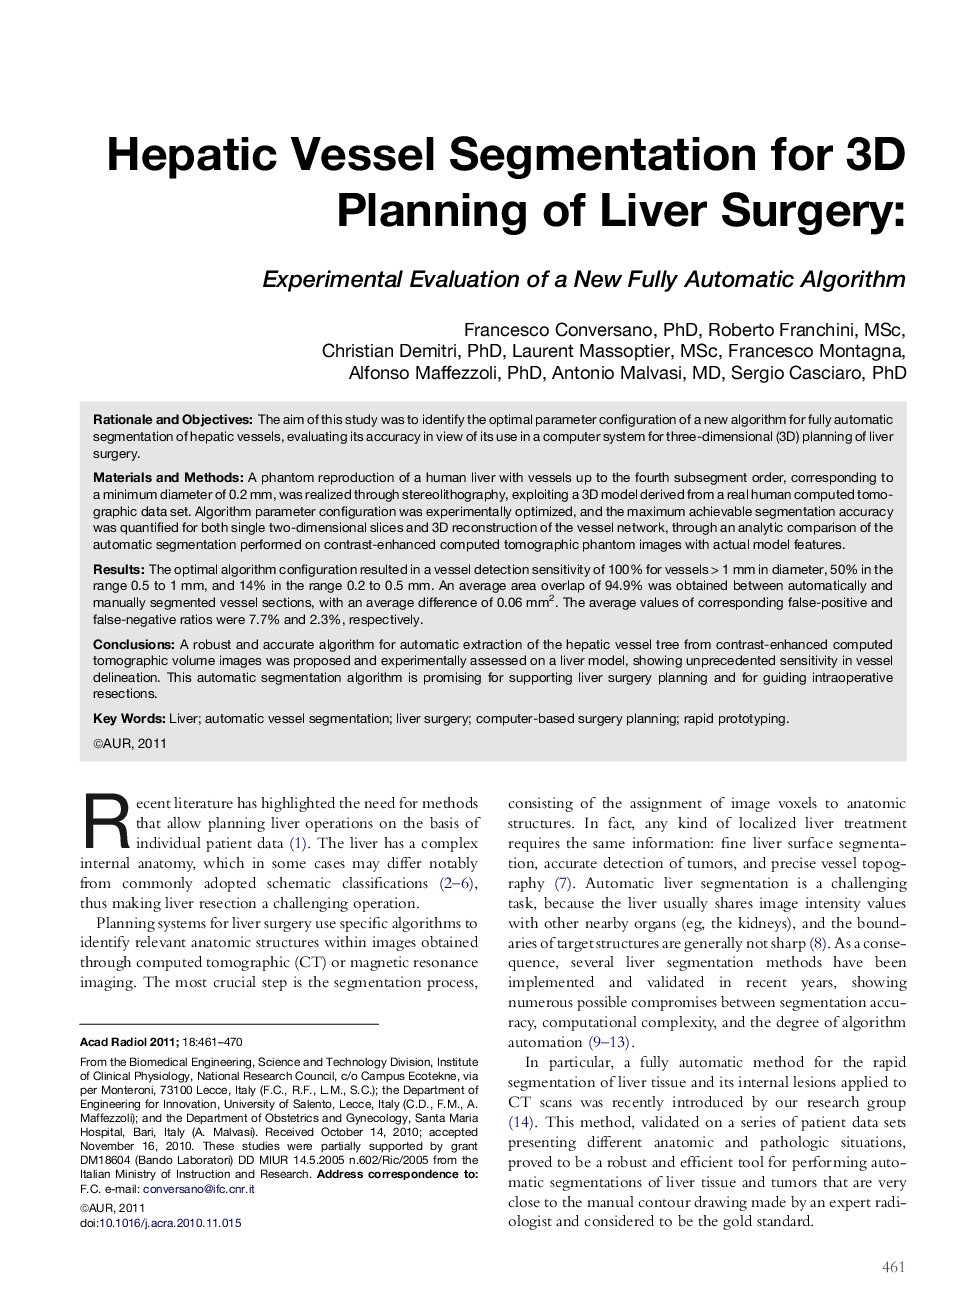 Hepatic Vessel Segmentation for 3D Planning of Liver Surgery